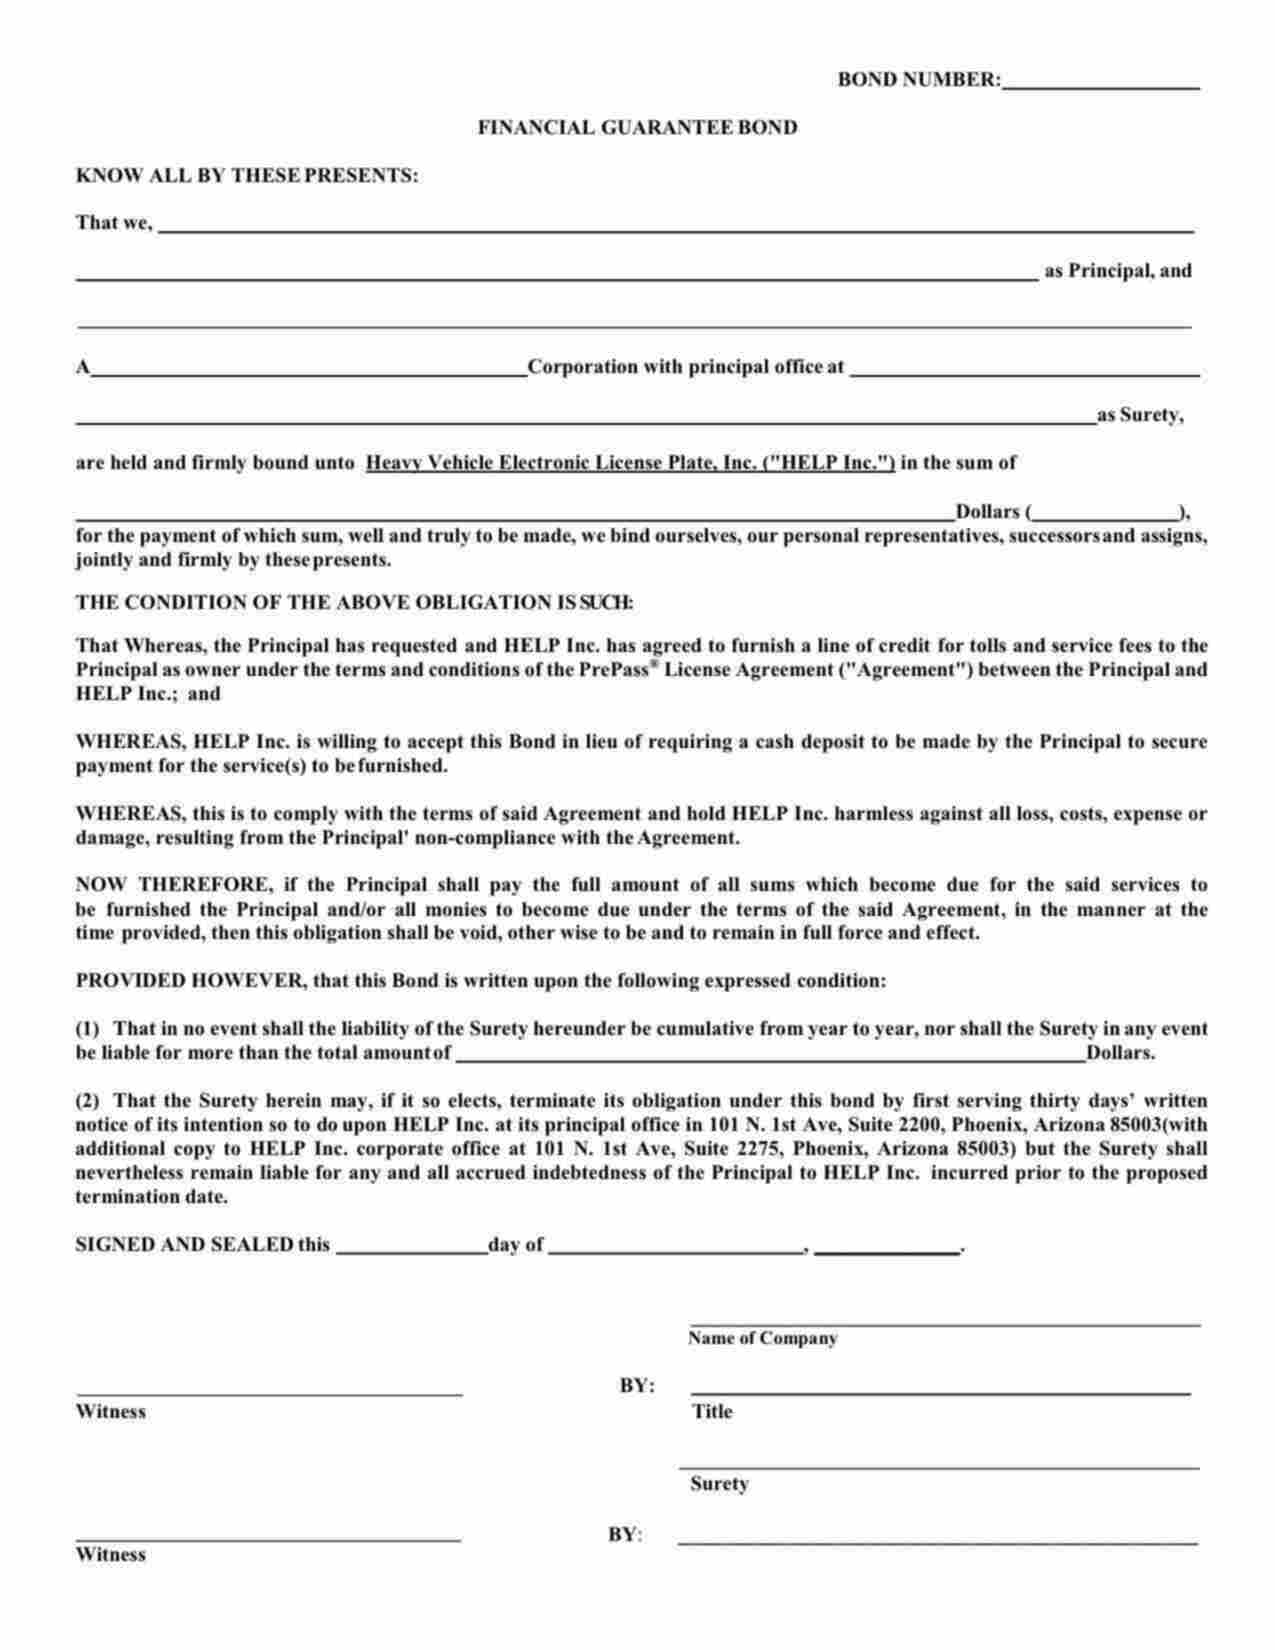 Federal PrePass / Help Inc License Financial Guarantee Bond Form